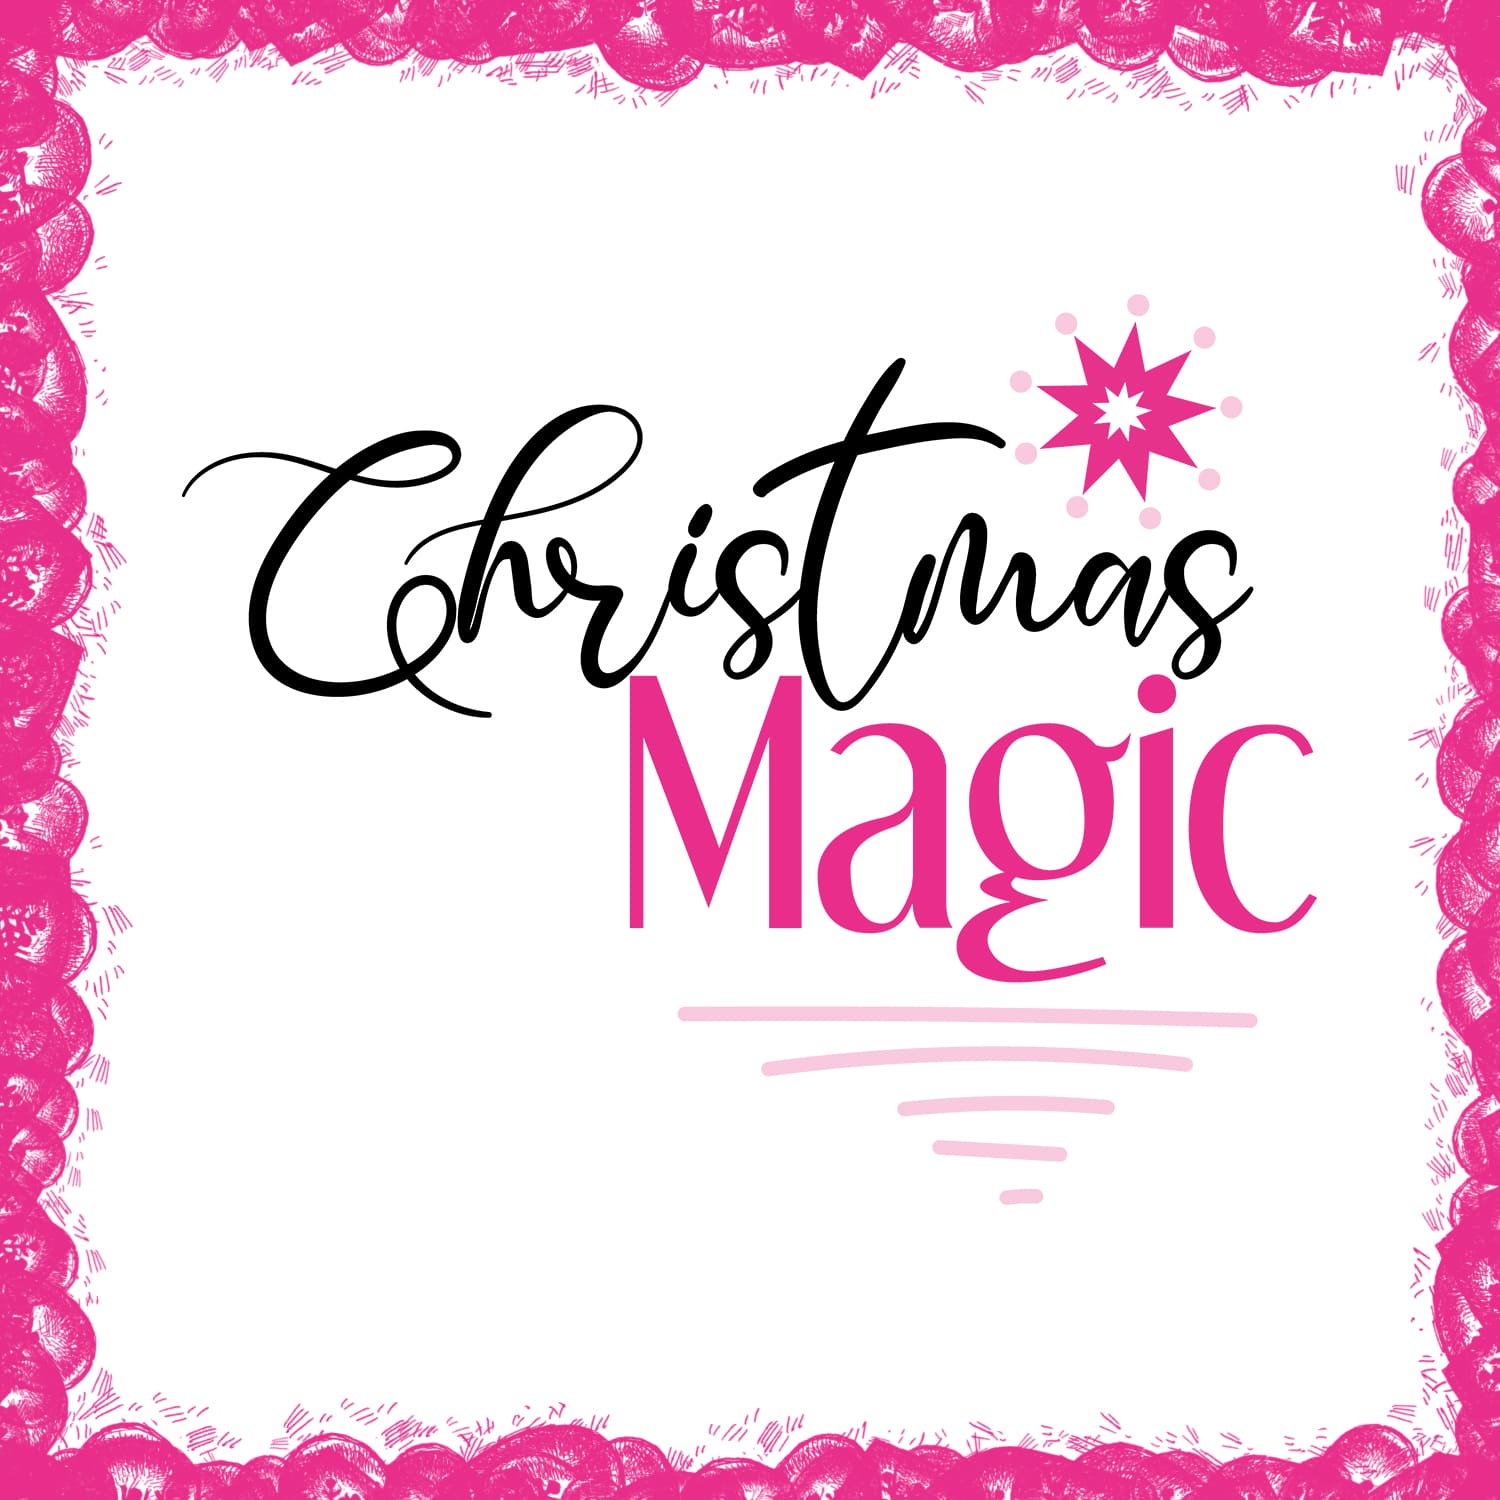 Christmas magic free svg files main cover.